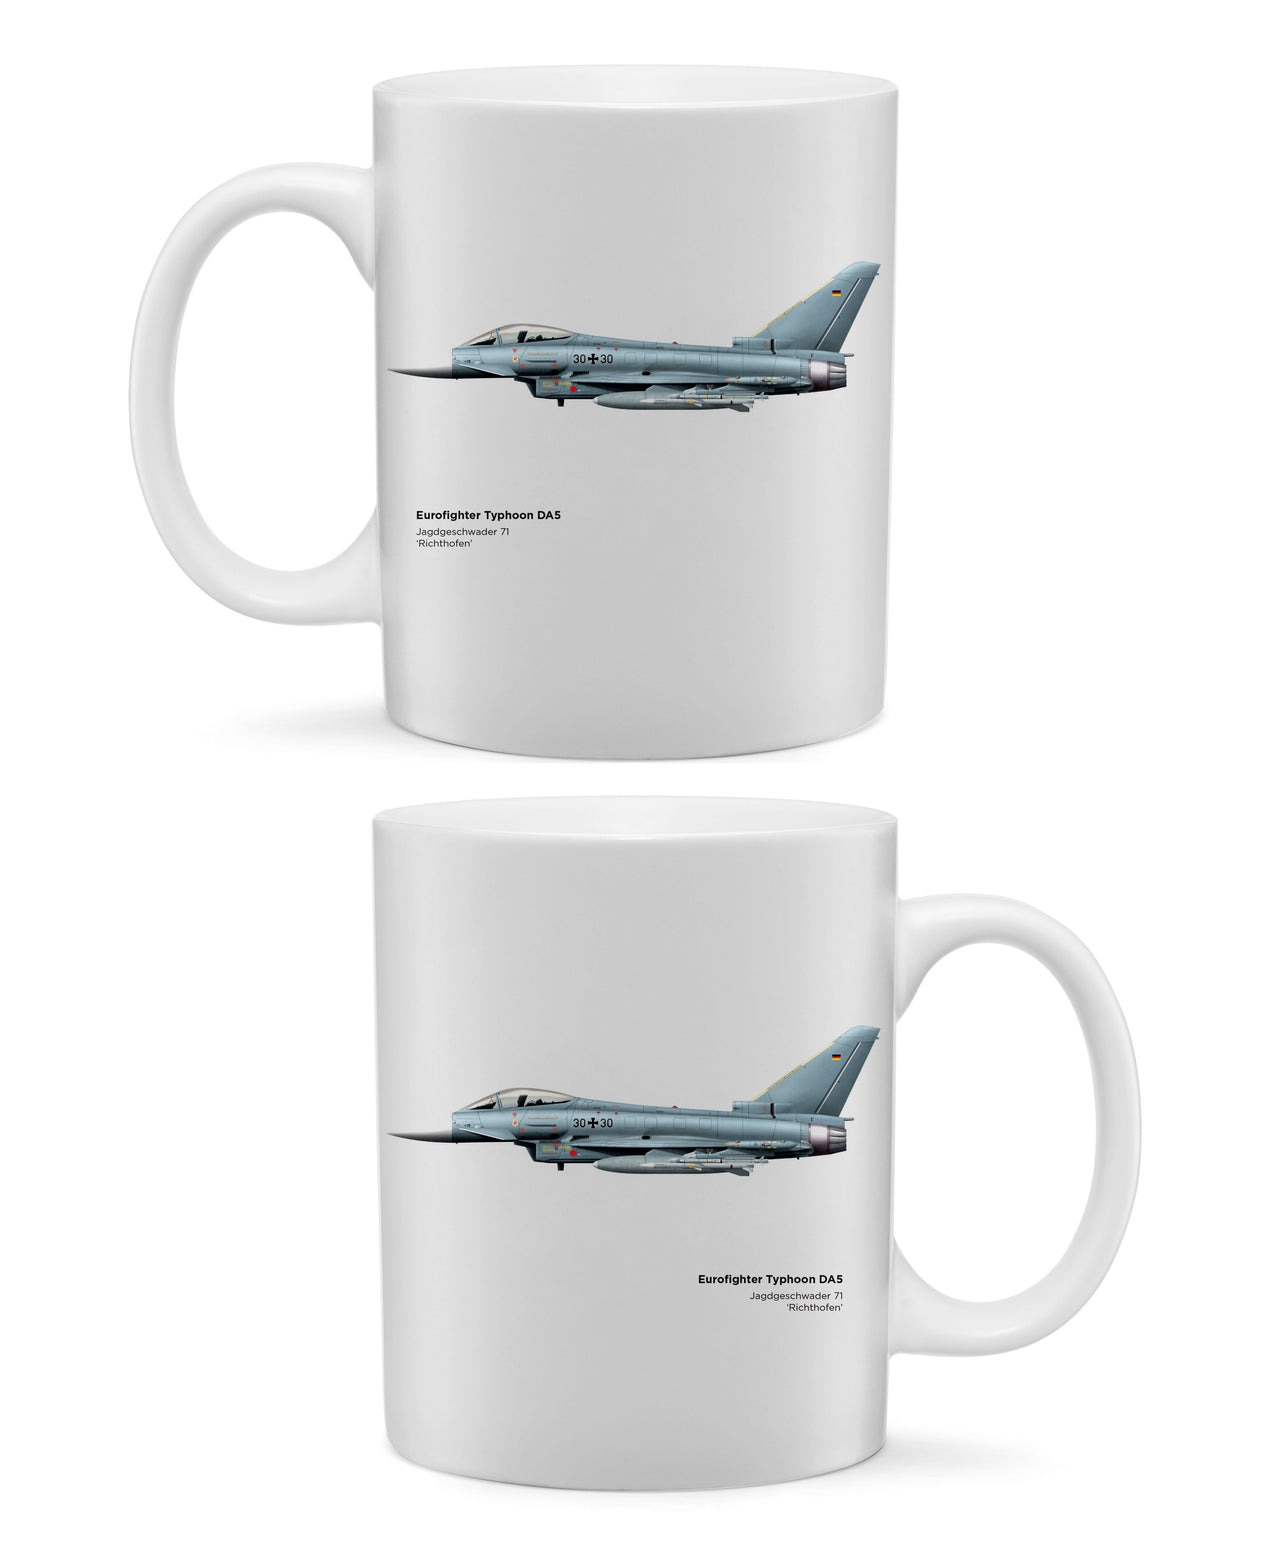 Eurofighter Typhoon DA5 - Mug